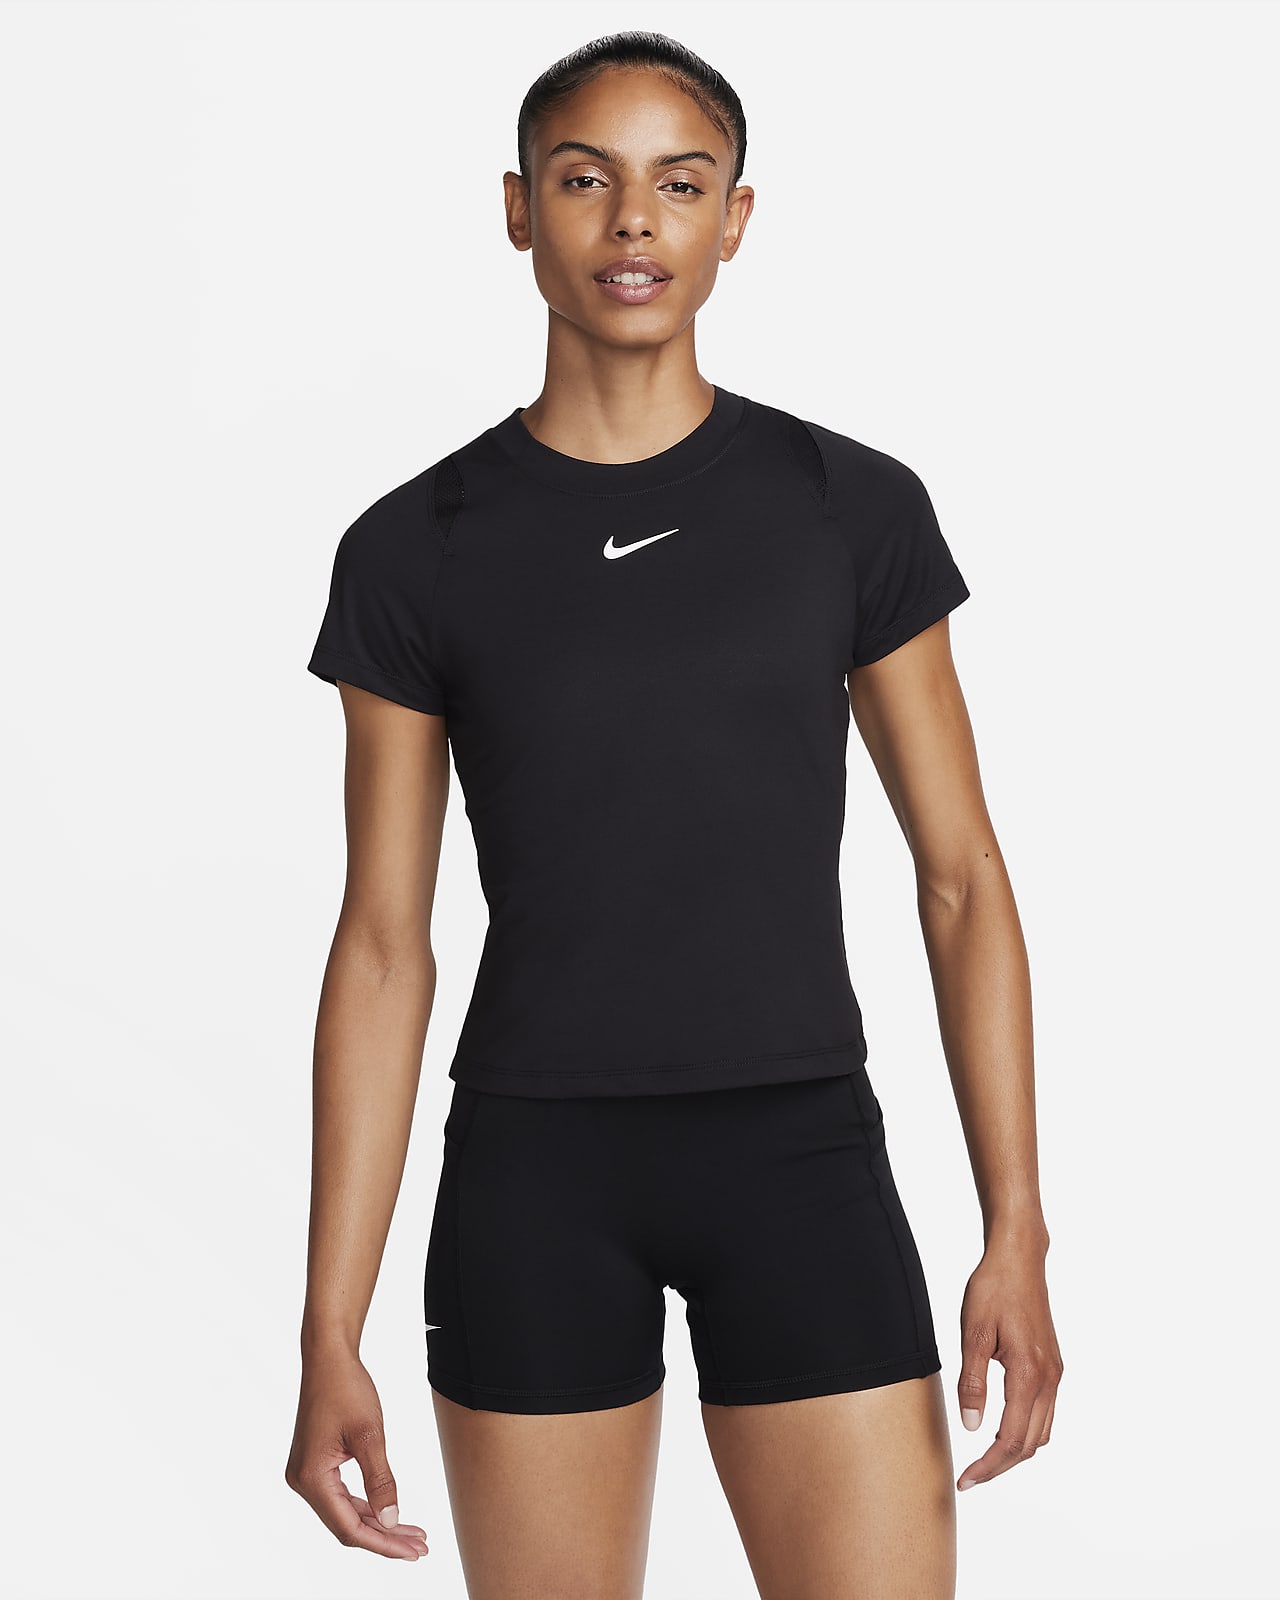 T-shirt femme Nike court advantage - Nike - Marques - Textile